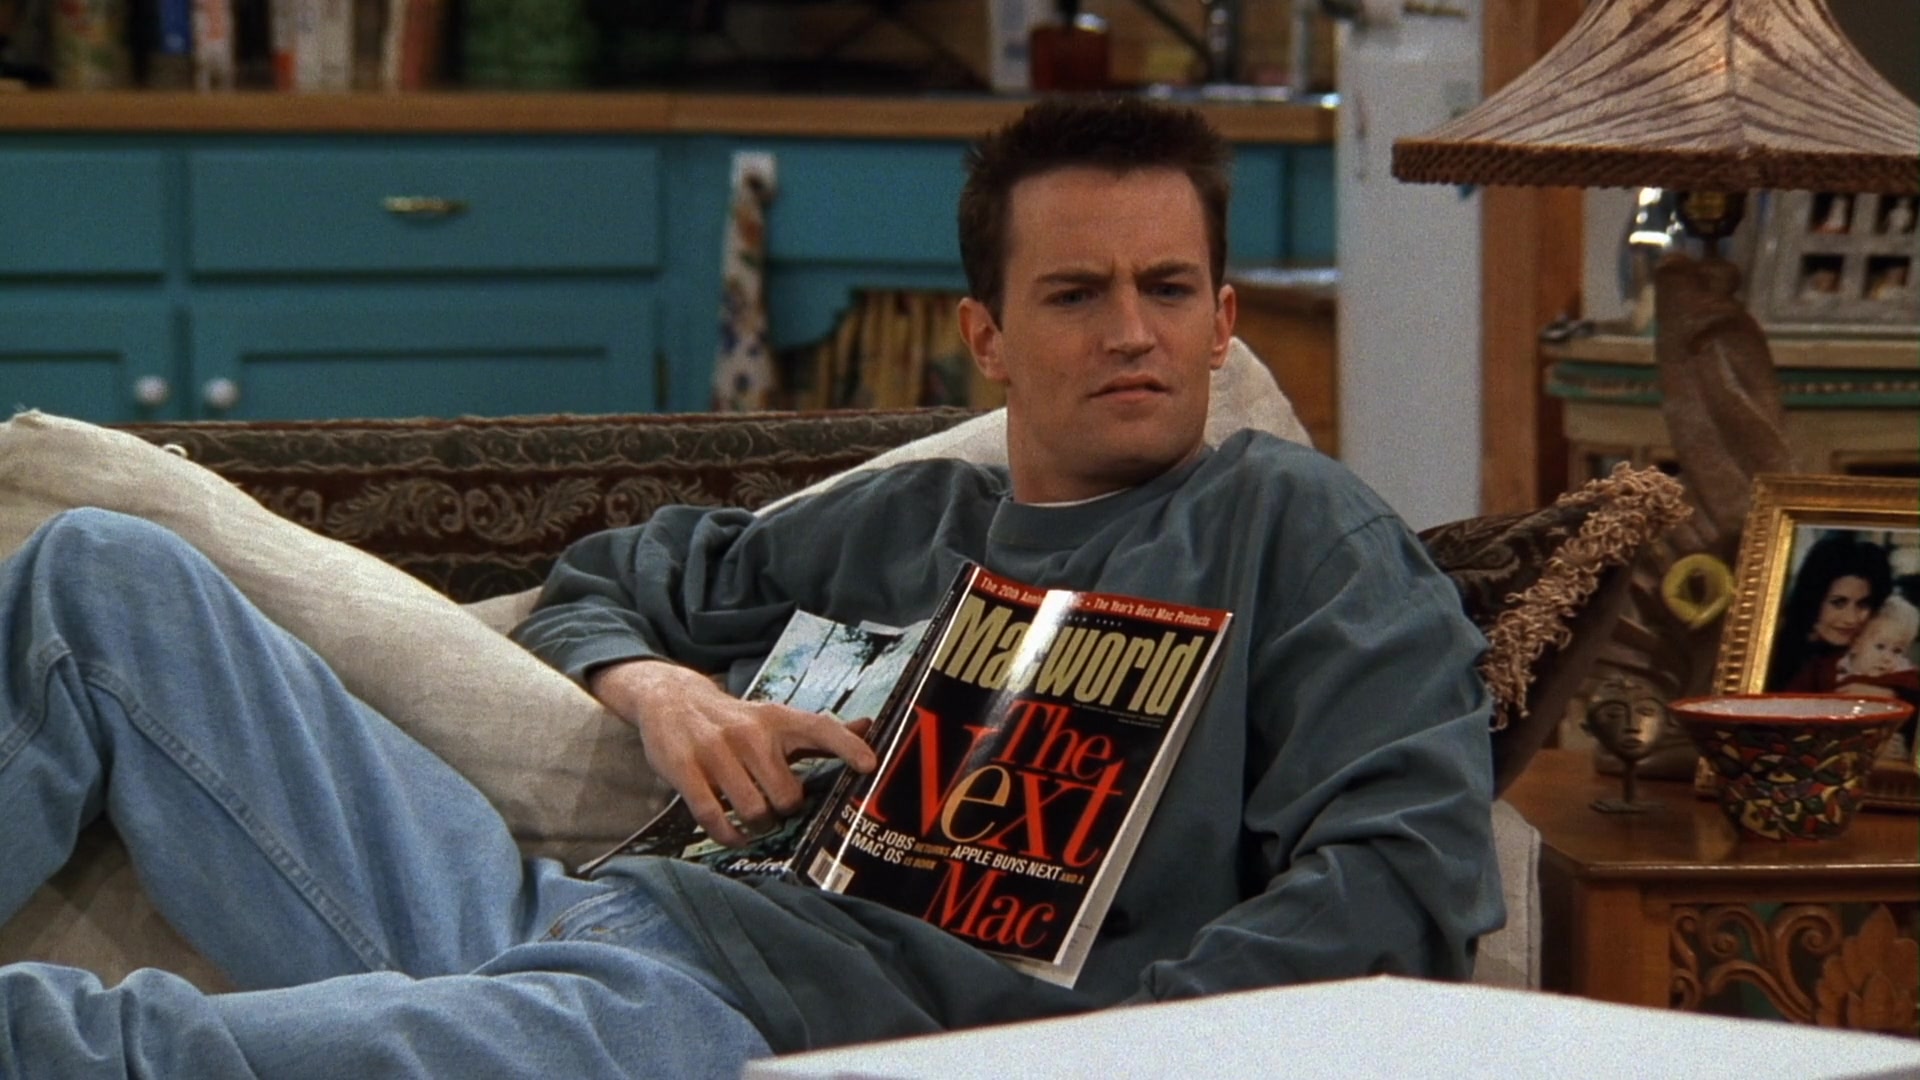 Macworld Magazine Held by Matthew Perry (Chandler Bing) in Friends Season 3...